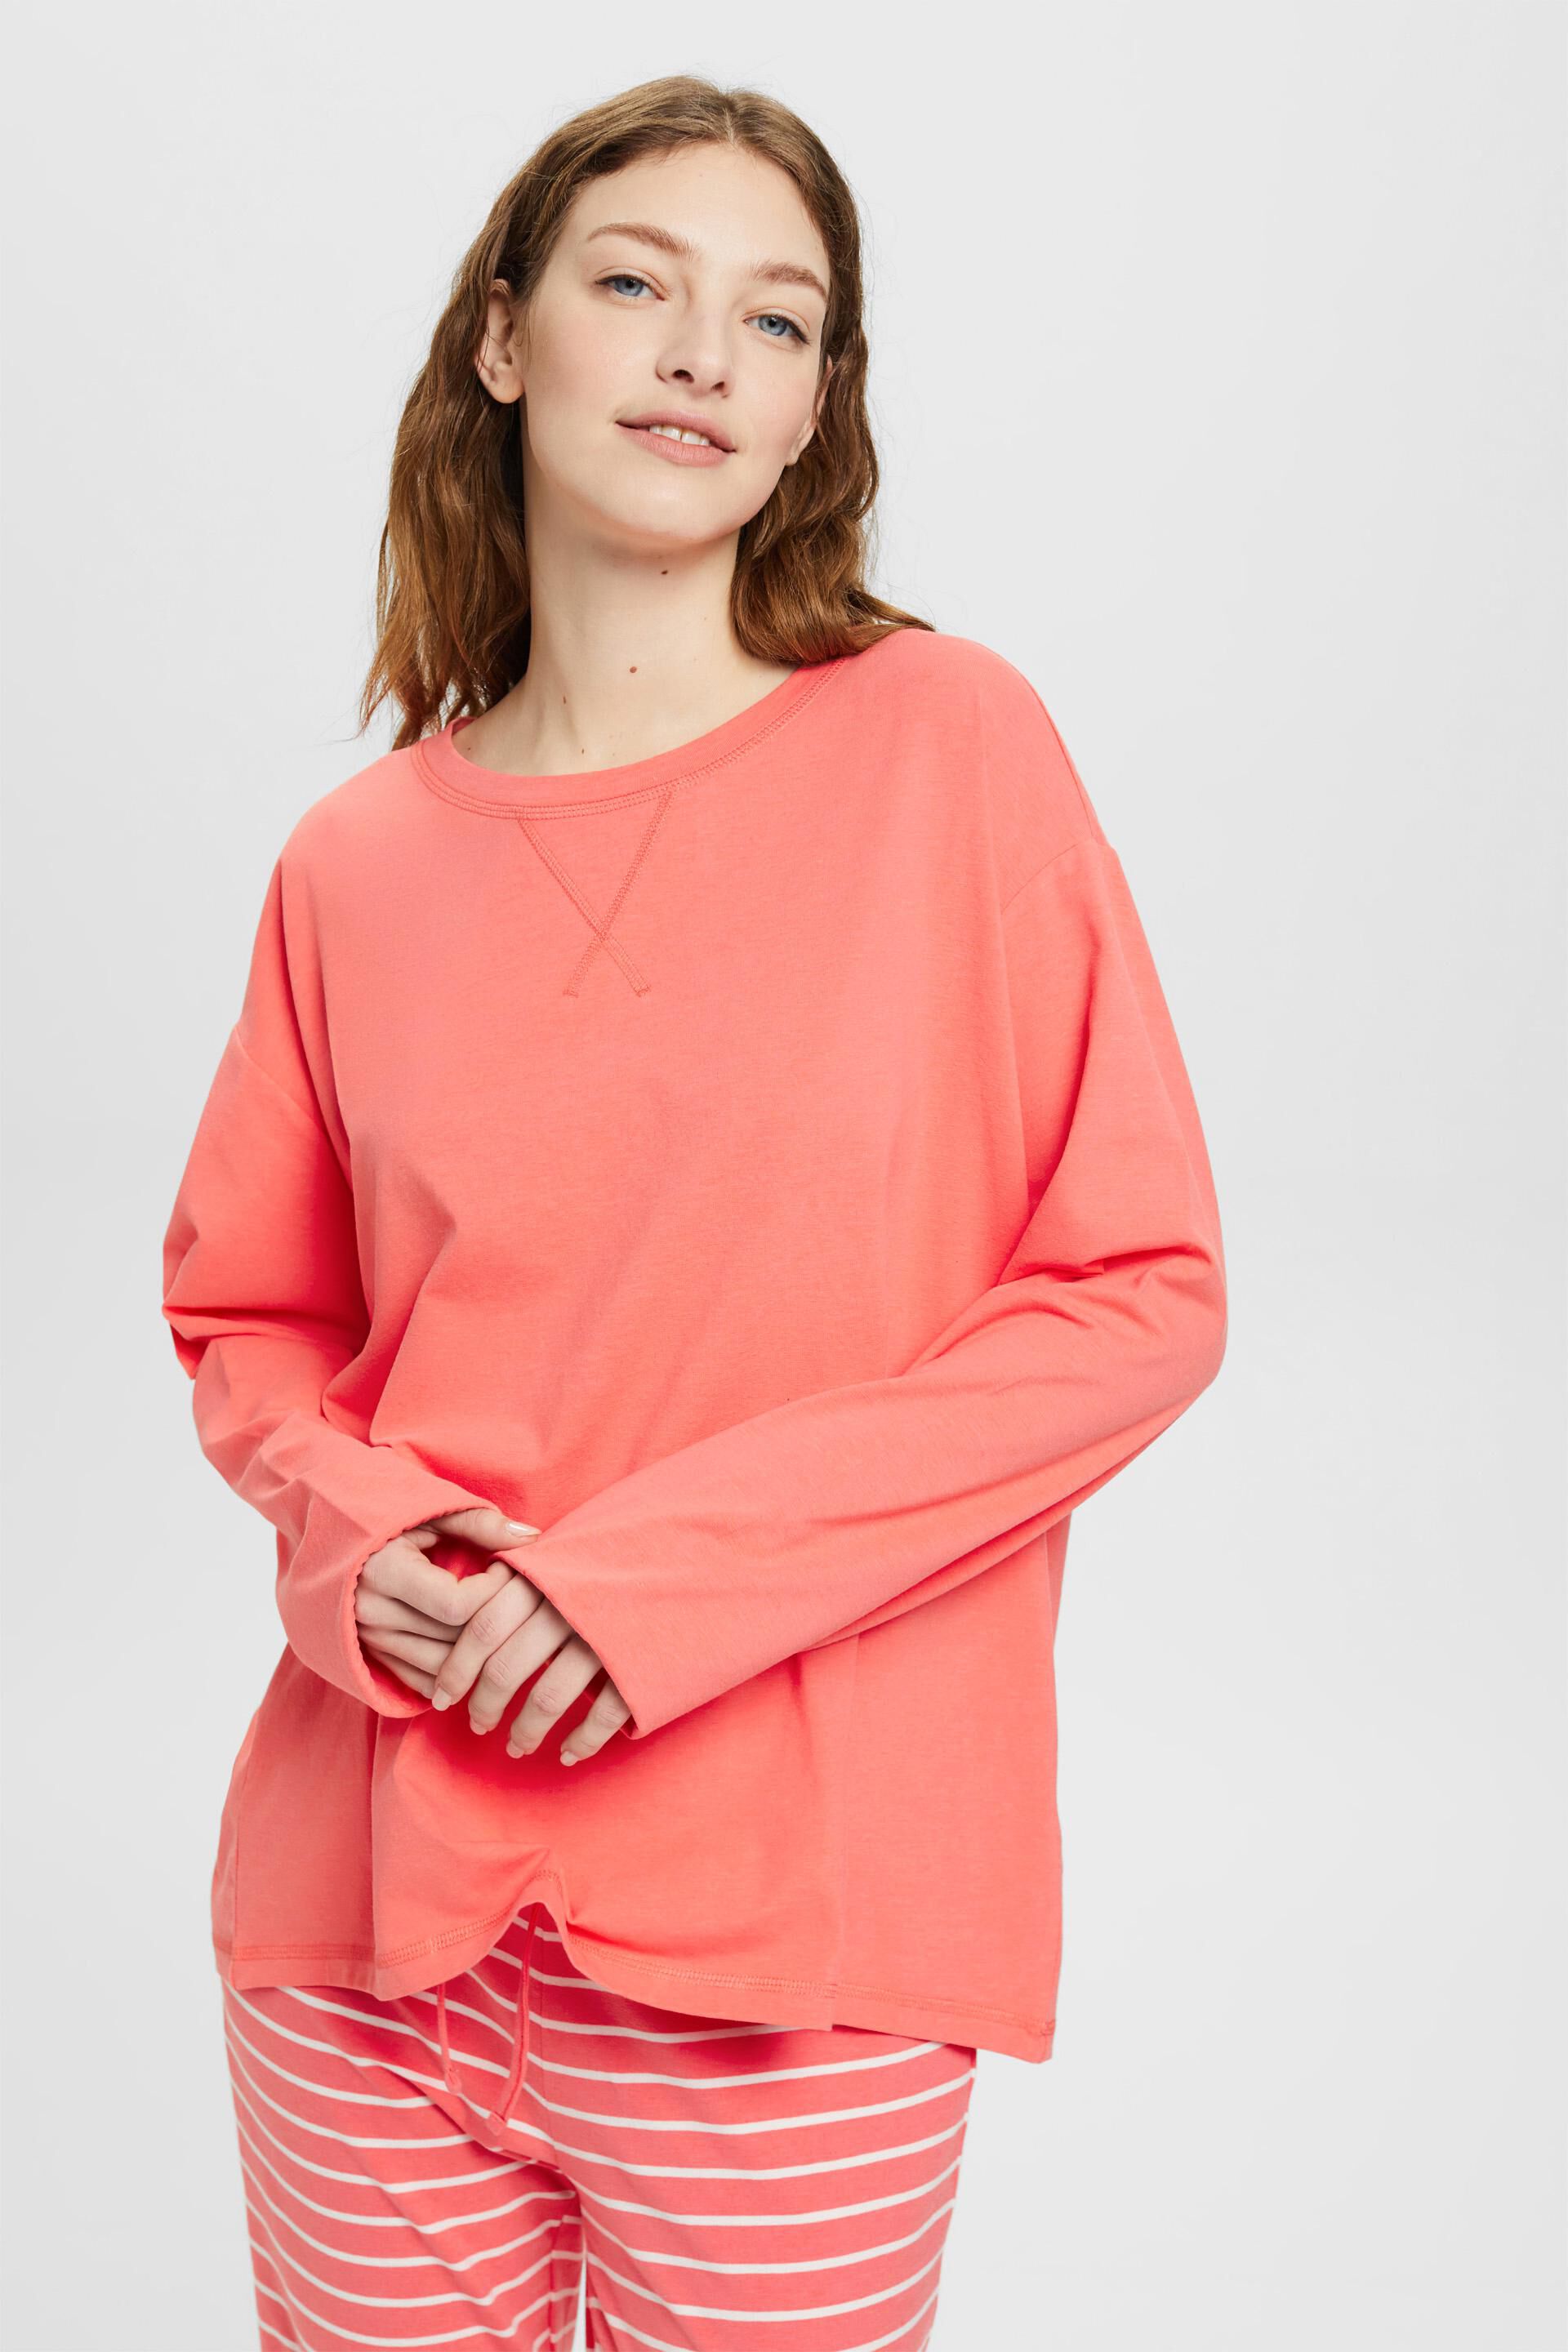 Esprit pyjama top Long-sleeved